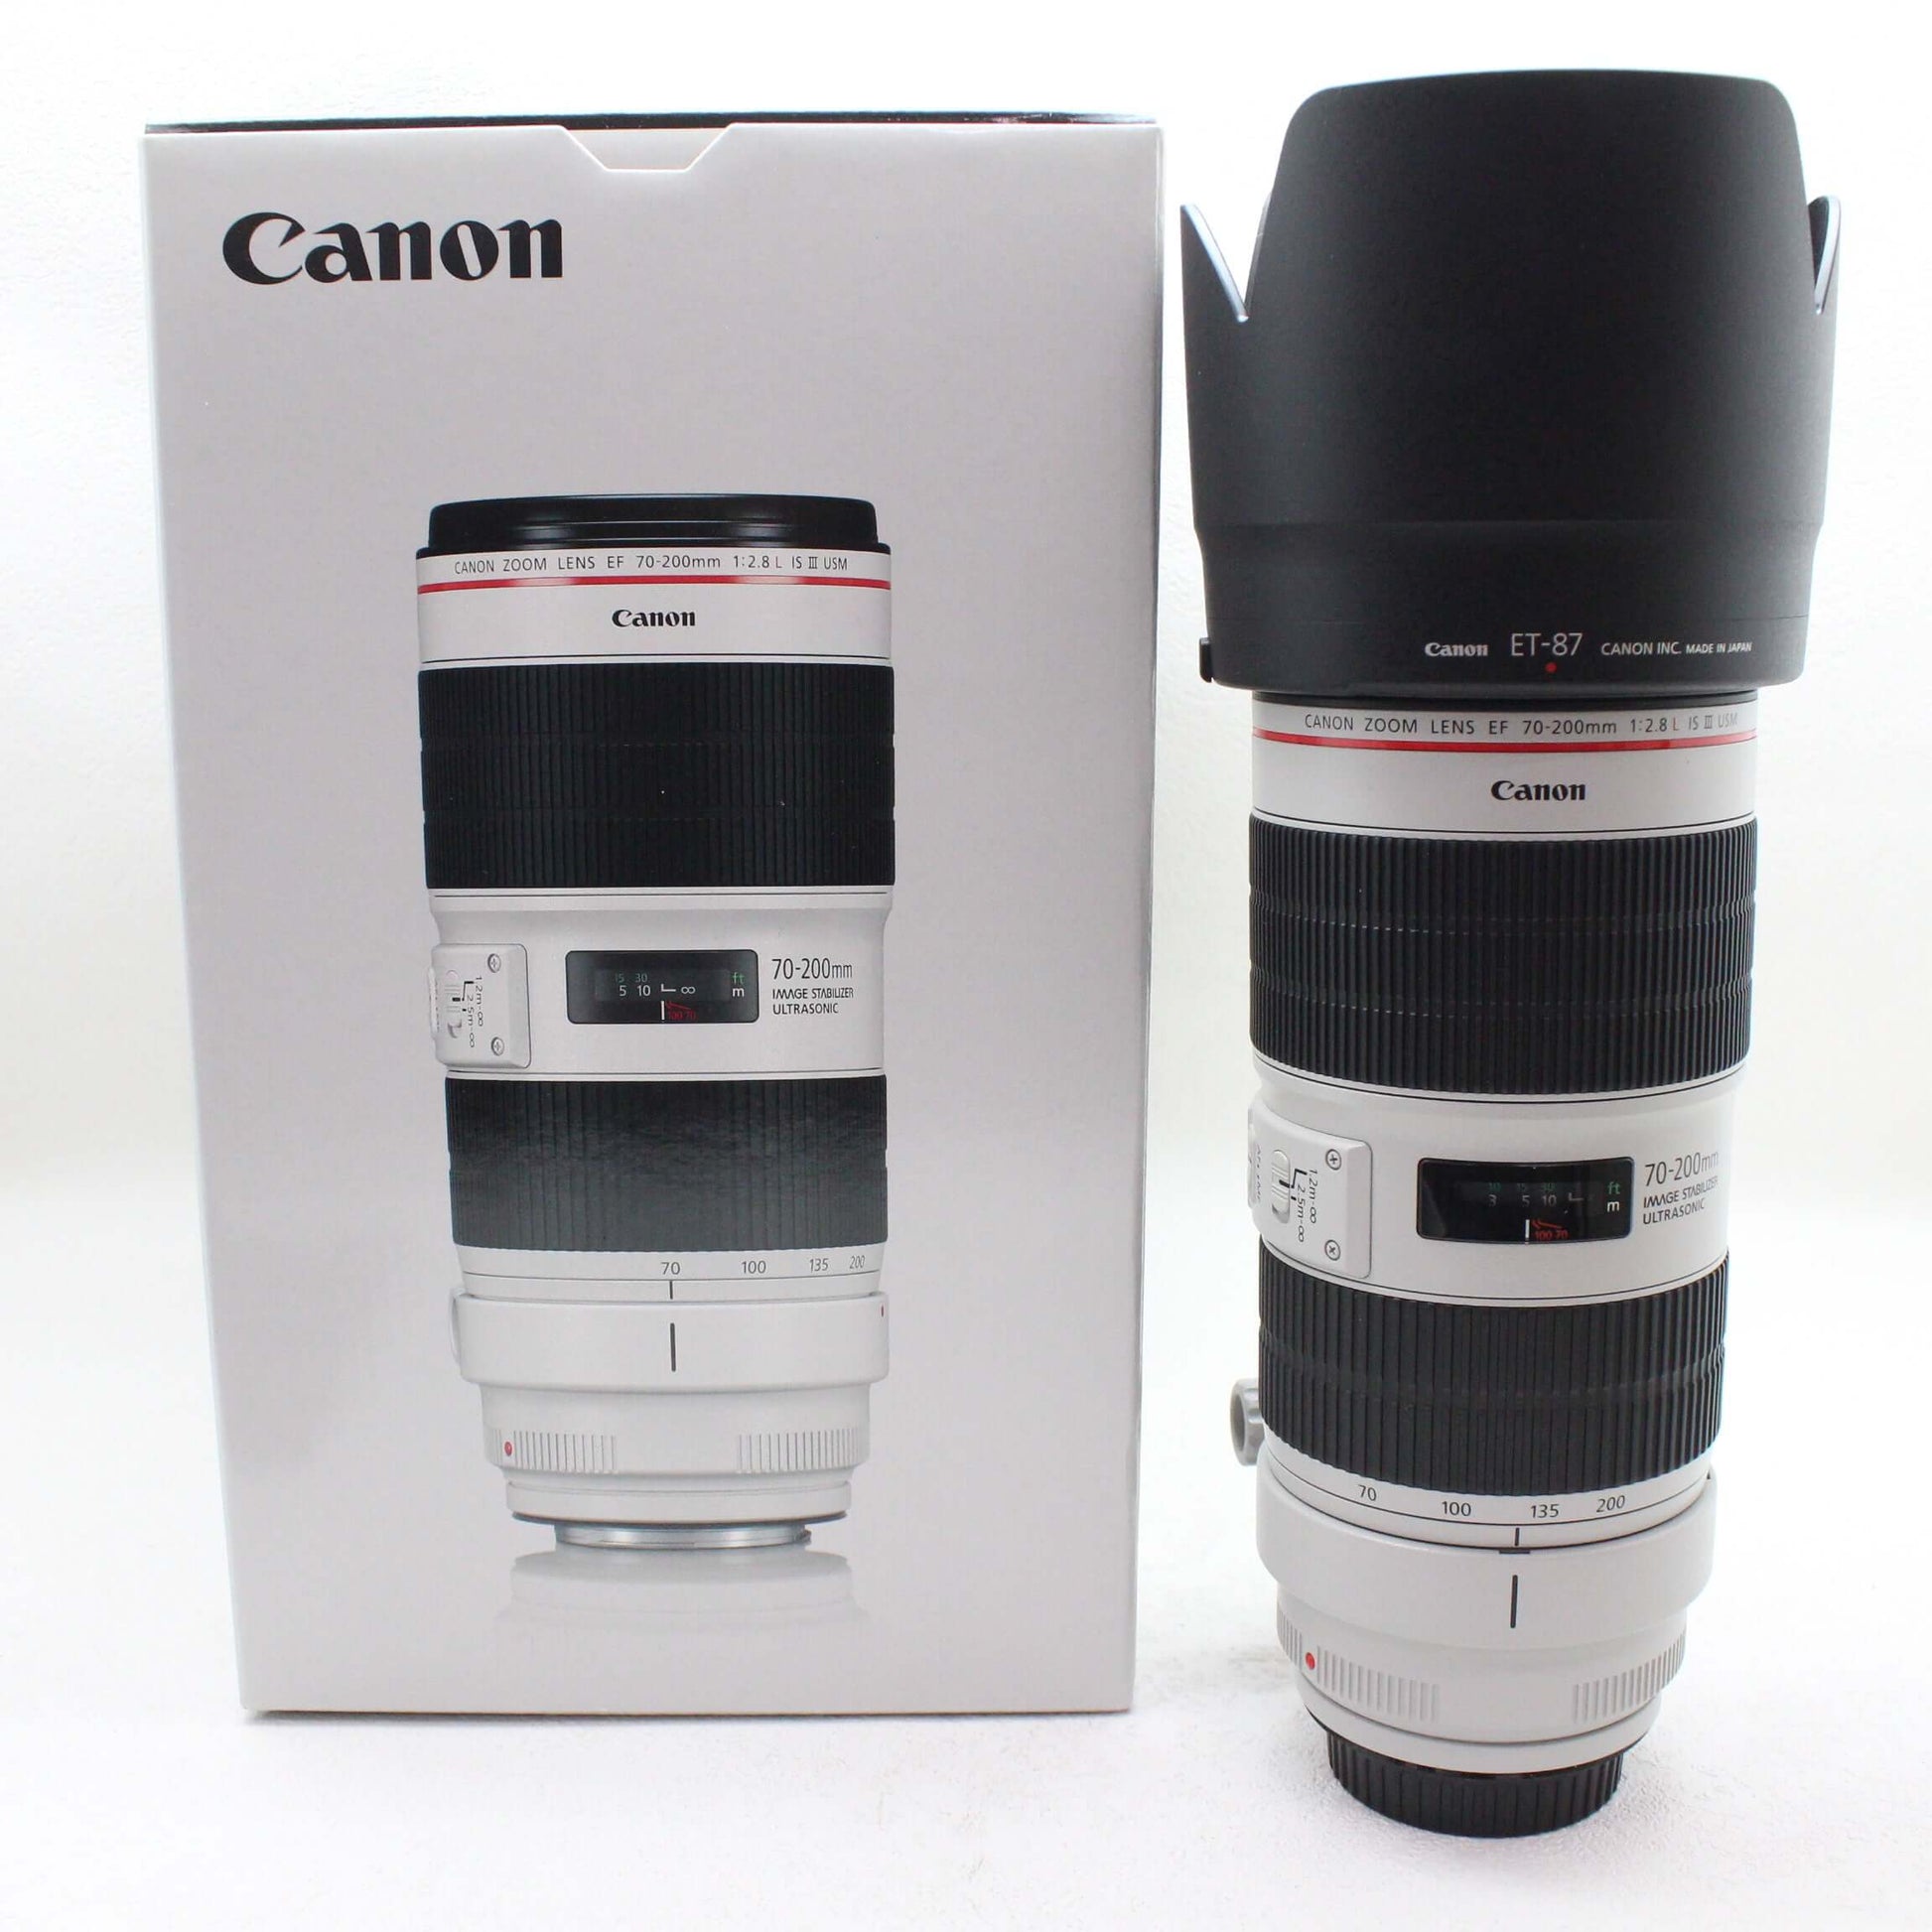 中古品 Canon EF70-200mm F2.8L IS III USM【2月10日(土) youtube生配信でご紹介】